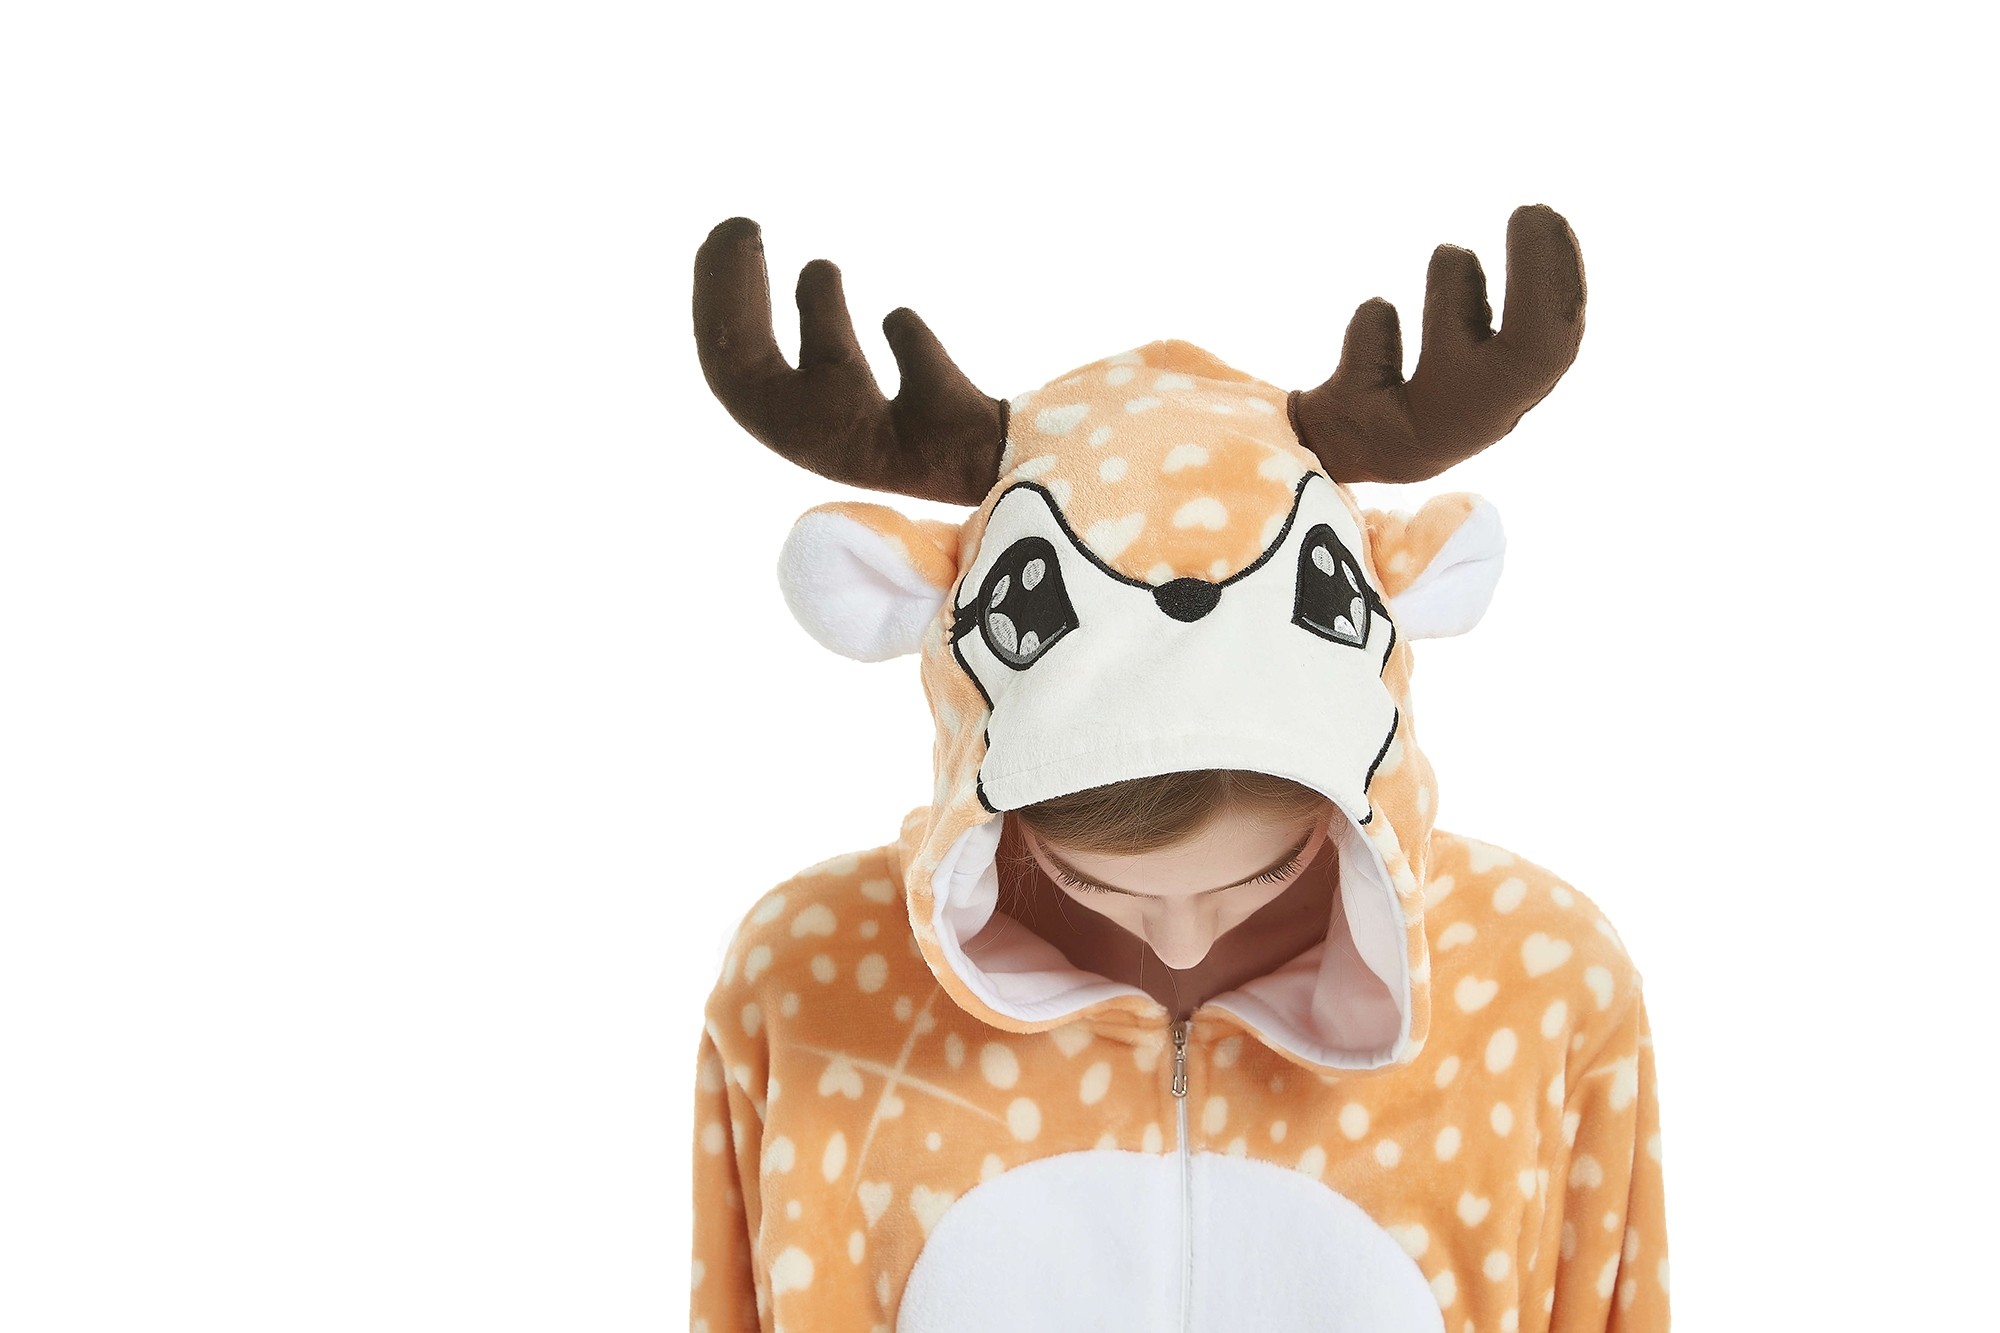 16pcs Animal Onesie Animal Pajamas Halloween Costumes Adult Deer Wholesale Price